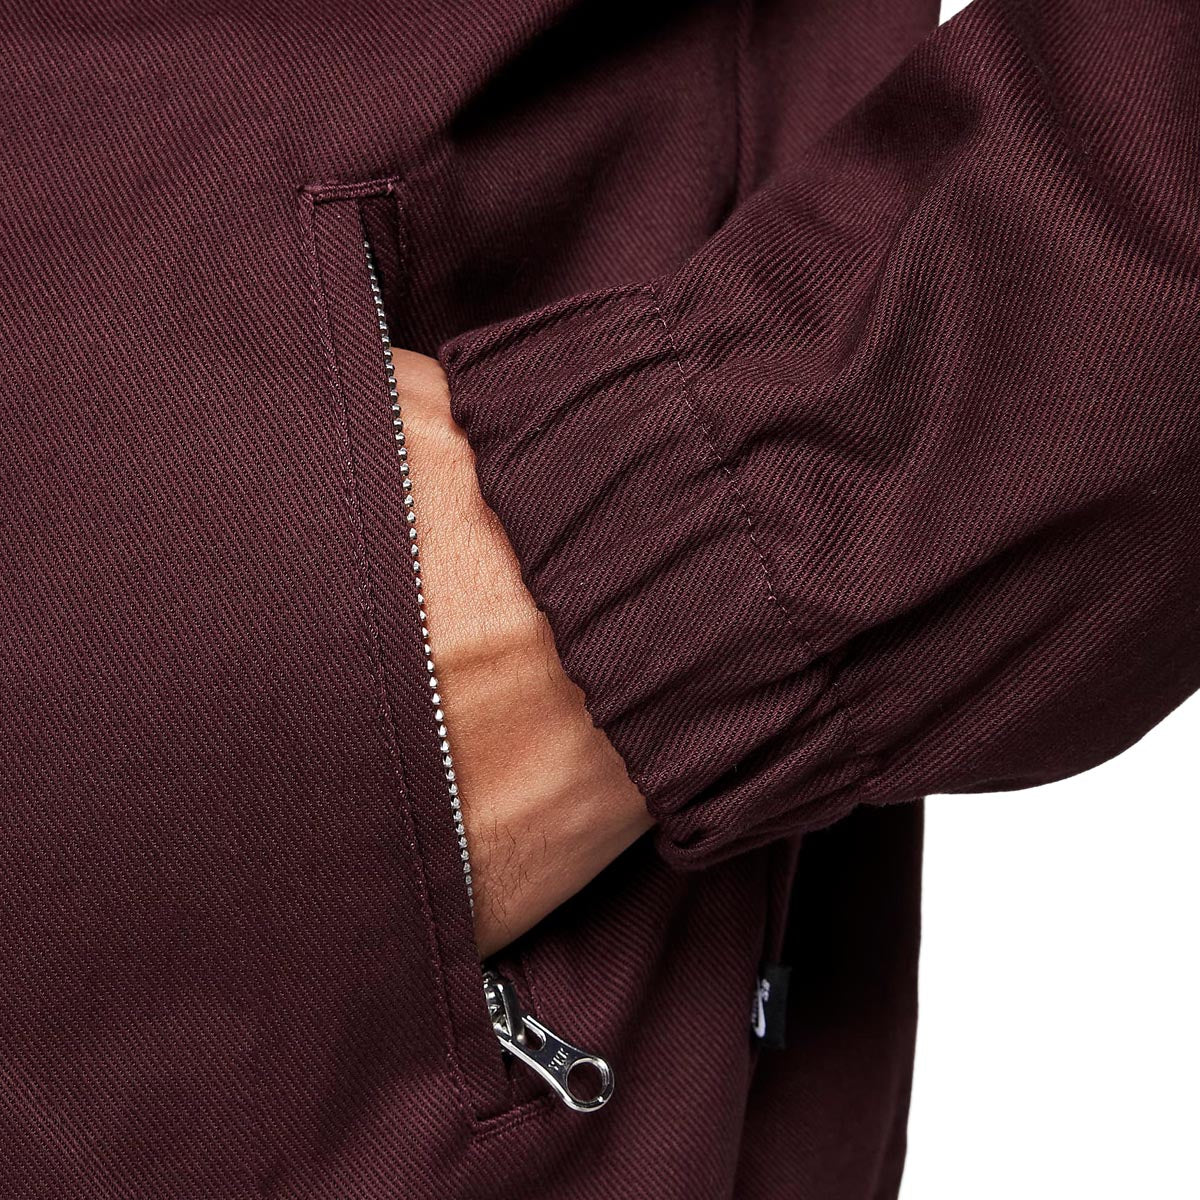 Nike SB Woven Twill Premium Skate Jacket - Burgundy Crush image 5